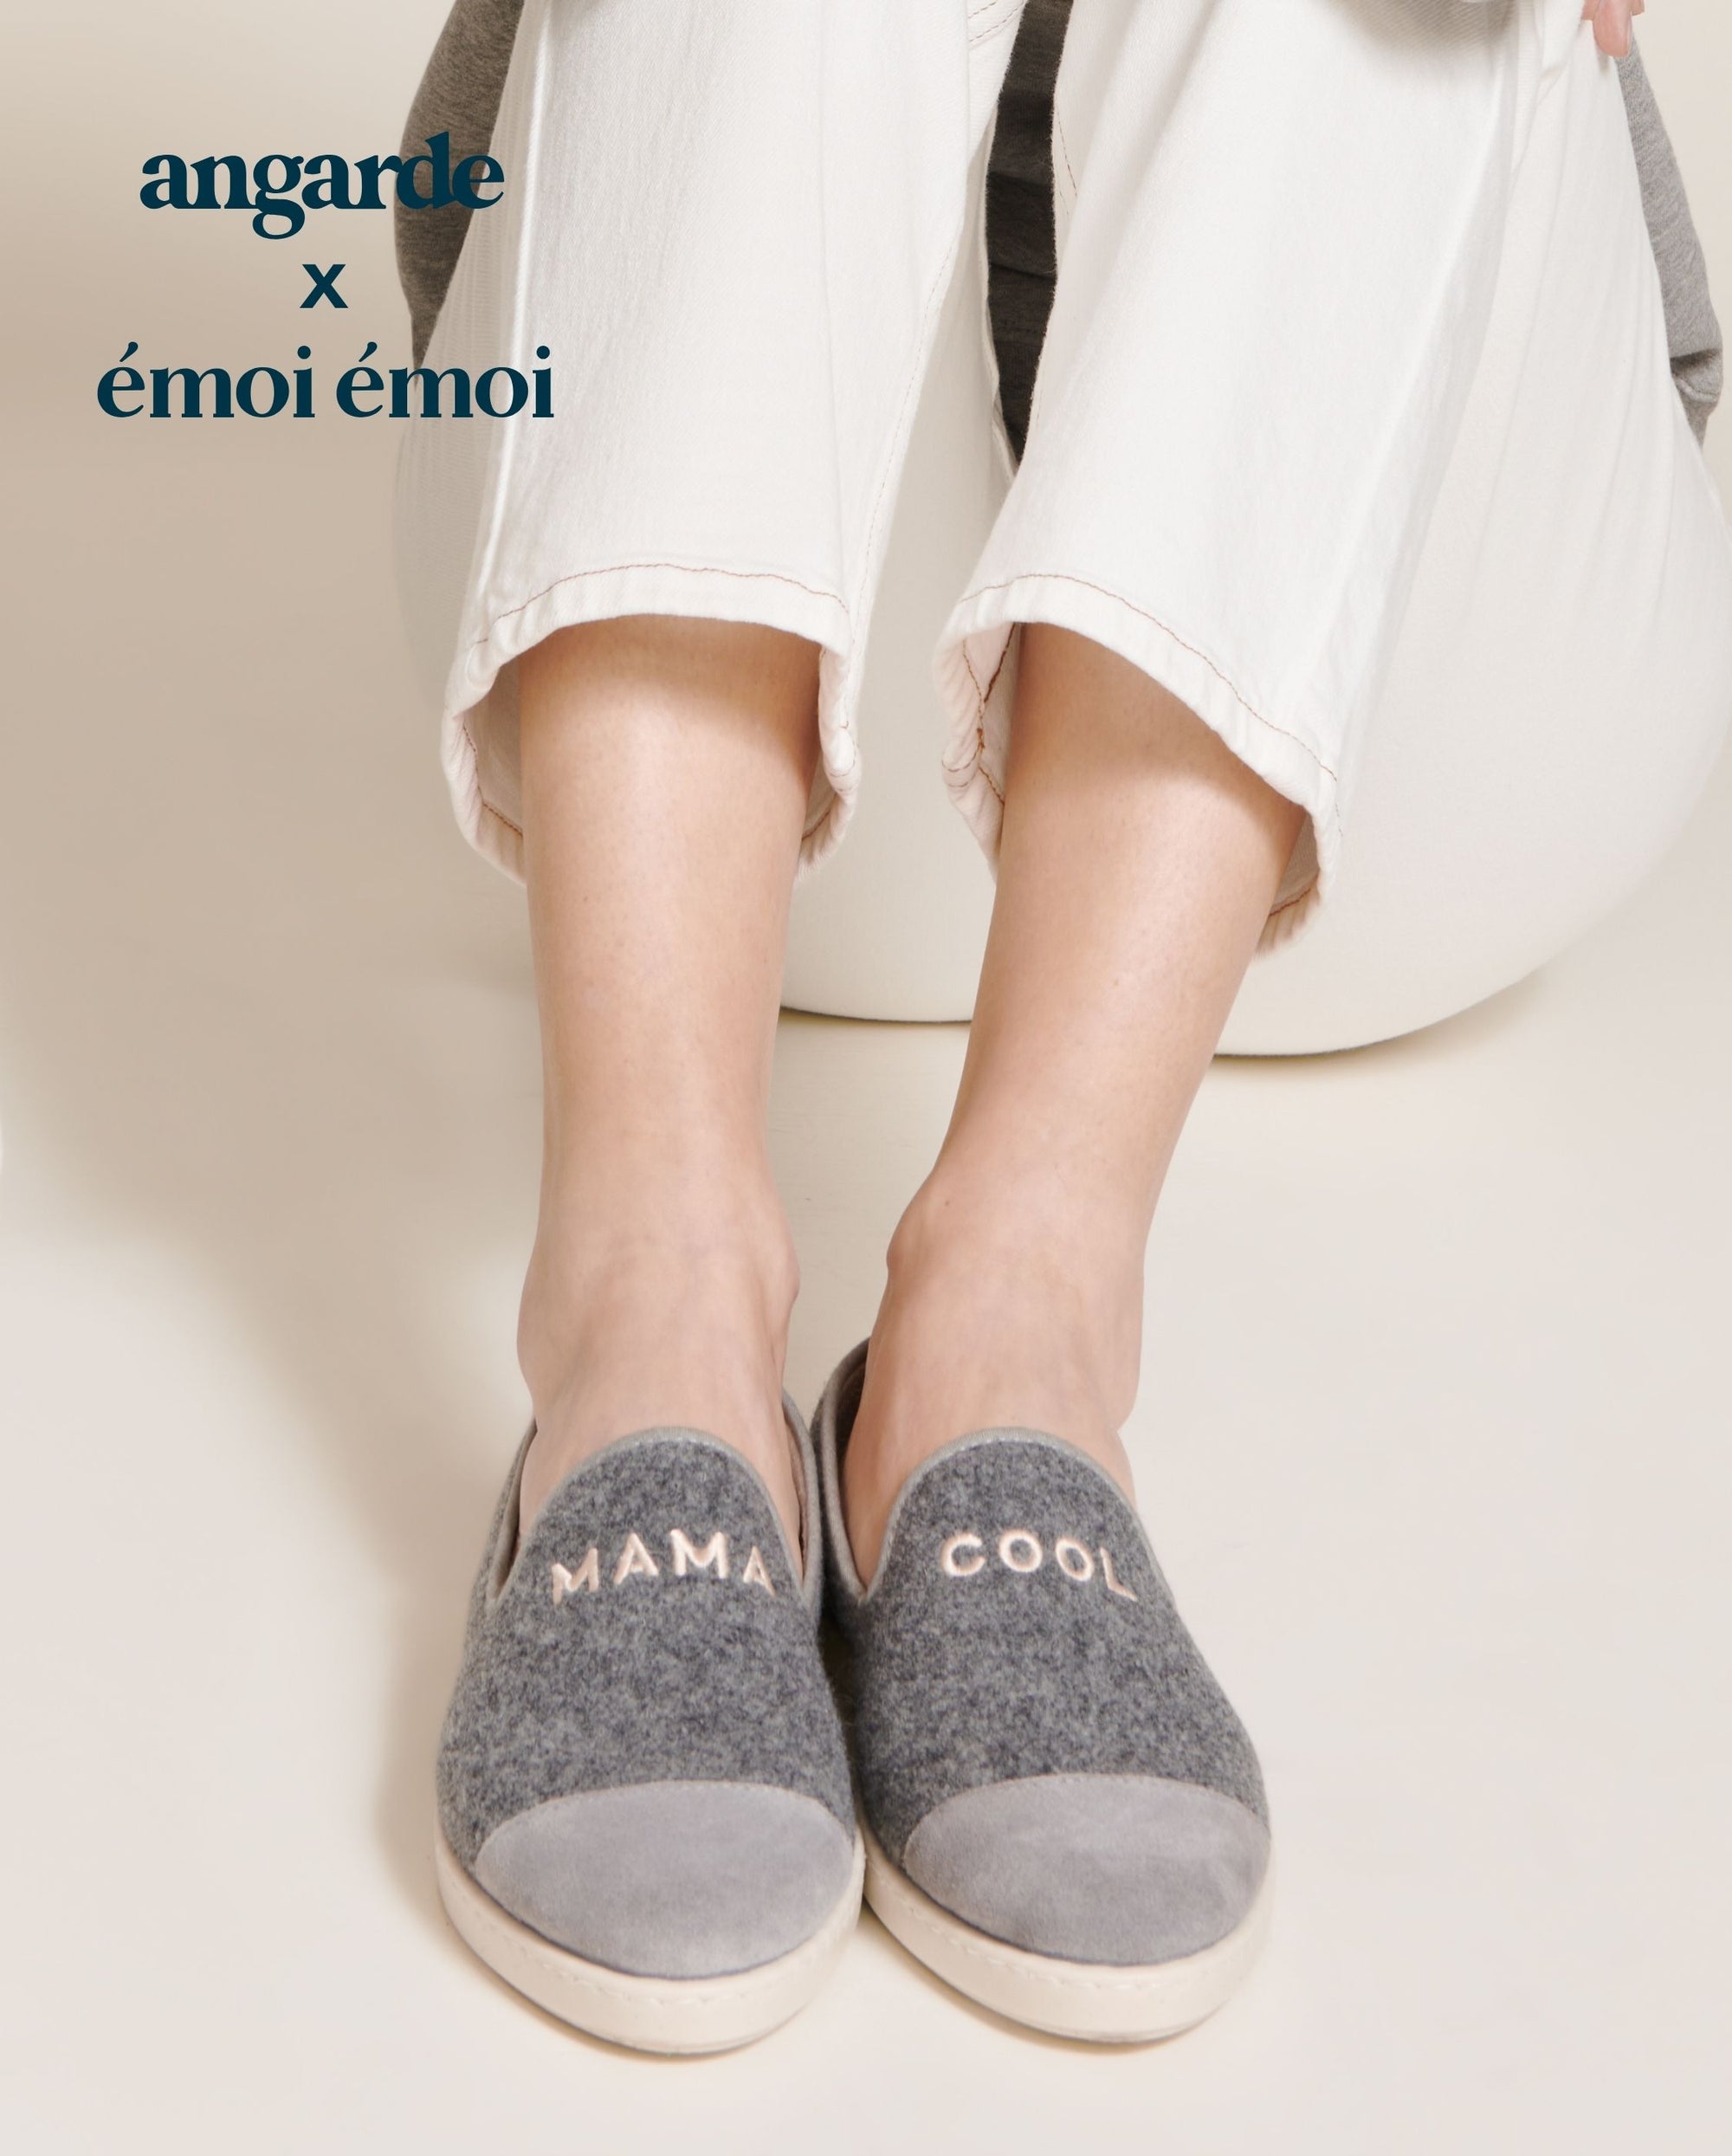 women's slippers Mama cool x emoi emoi packshot face 